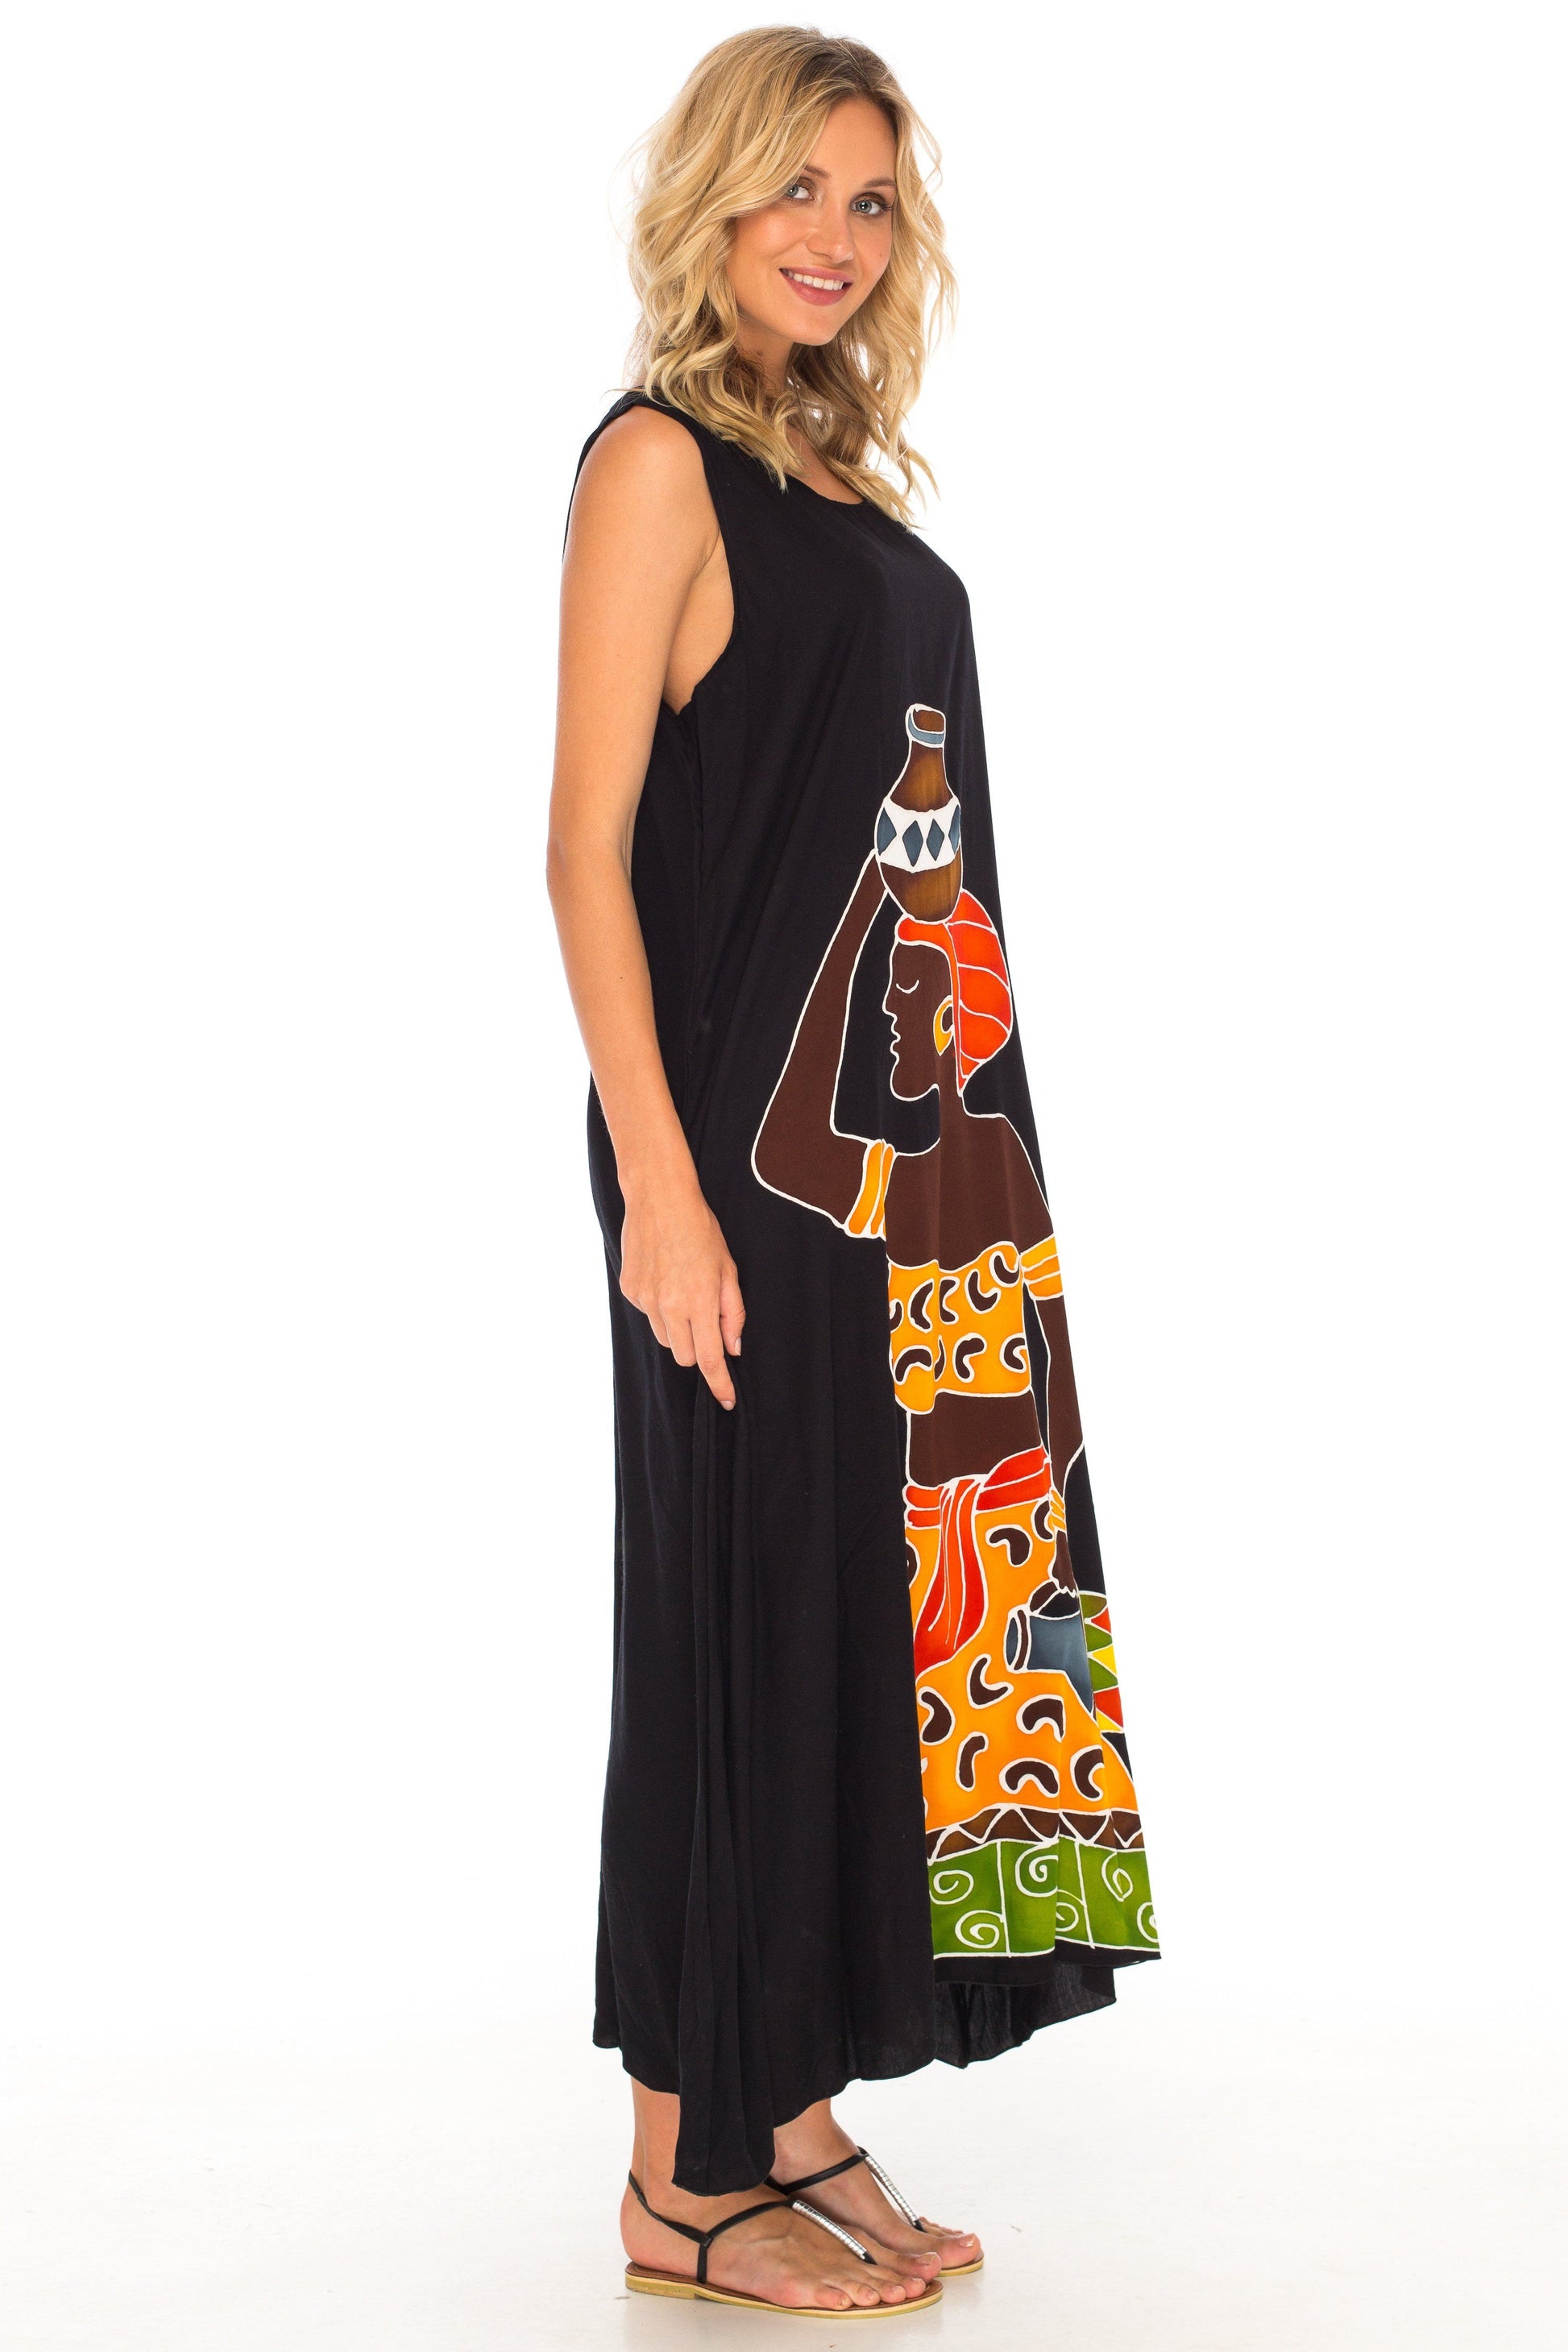 Sleeveless Summer Tank Dress with Hand-painted Tribal Design - Love-ShuShi-black dress-Shu-Shi